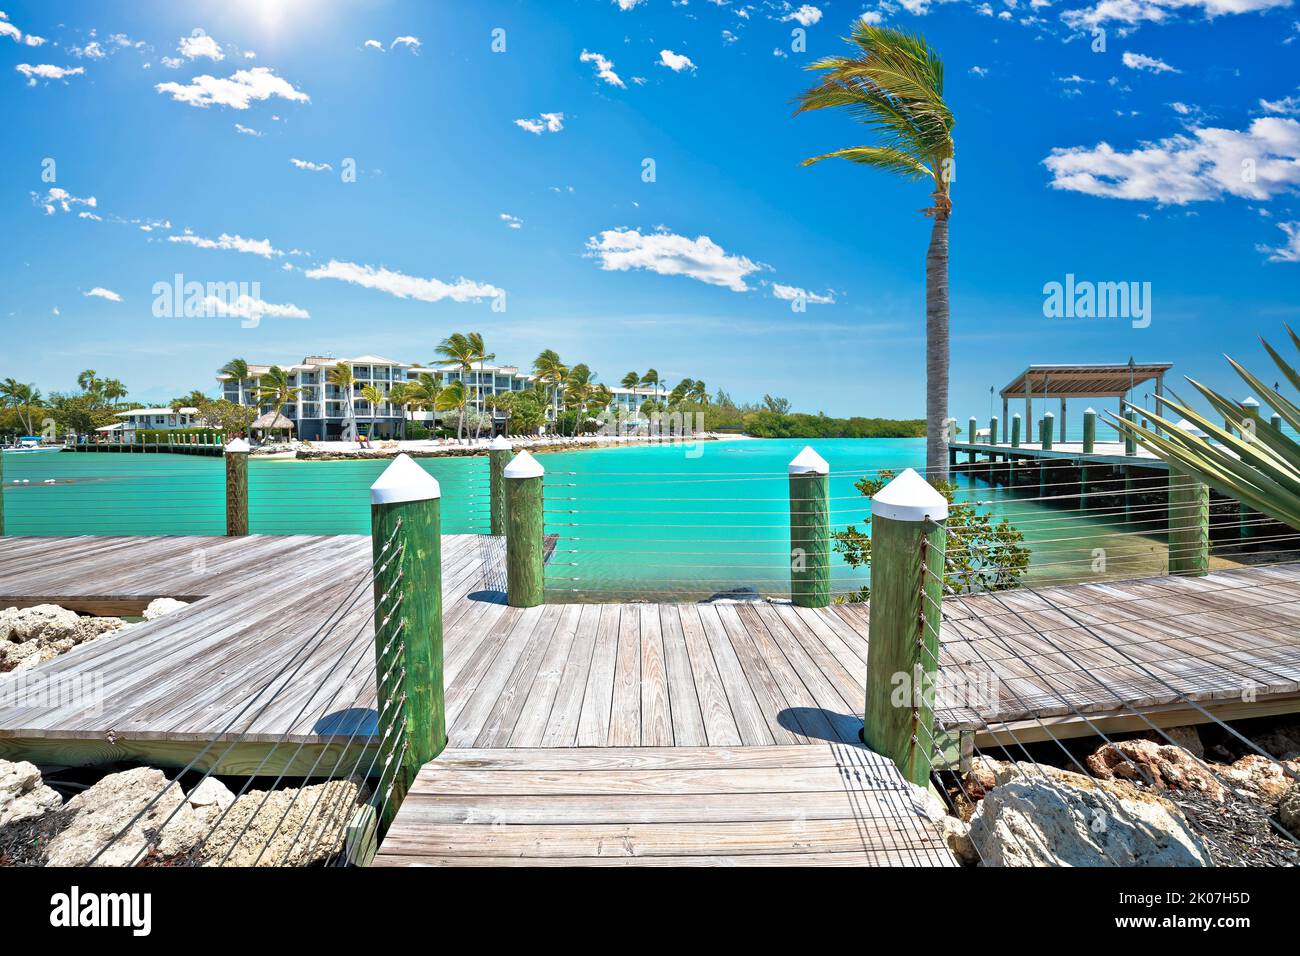 Idyllic turquoise bay in Islamorada on Florida Keys, Florida stare of USA Stock Photo